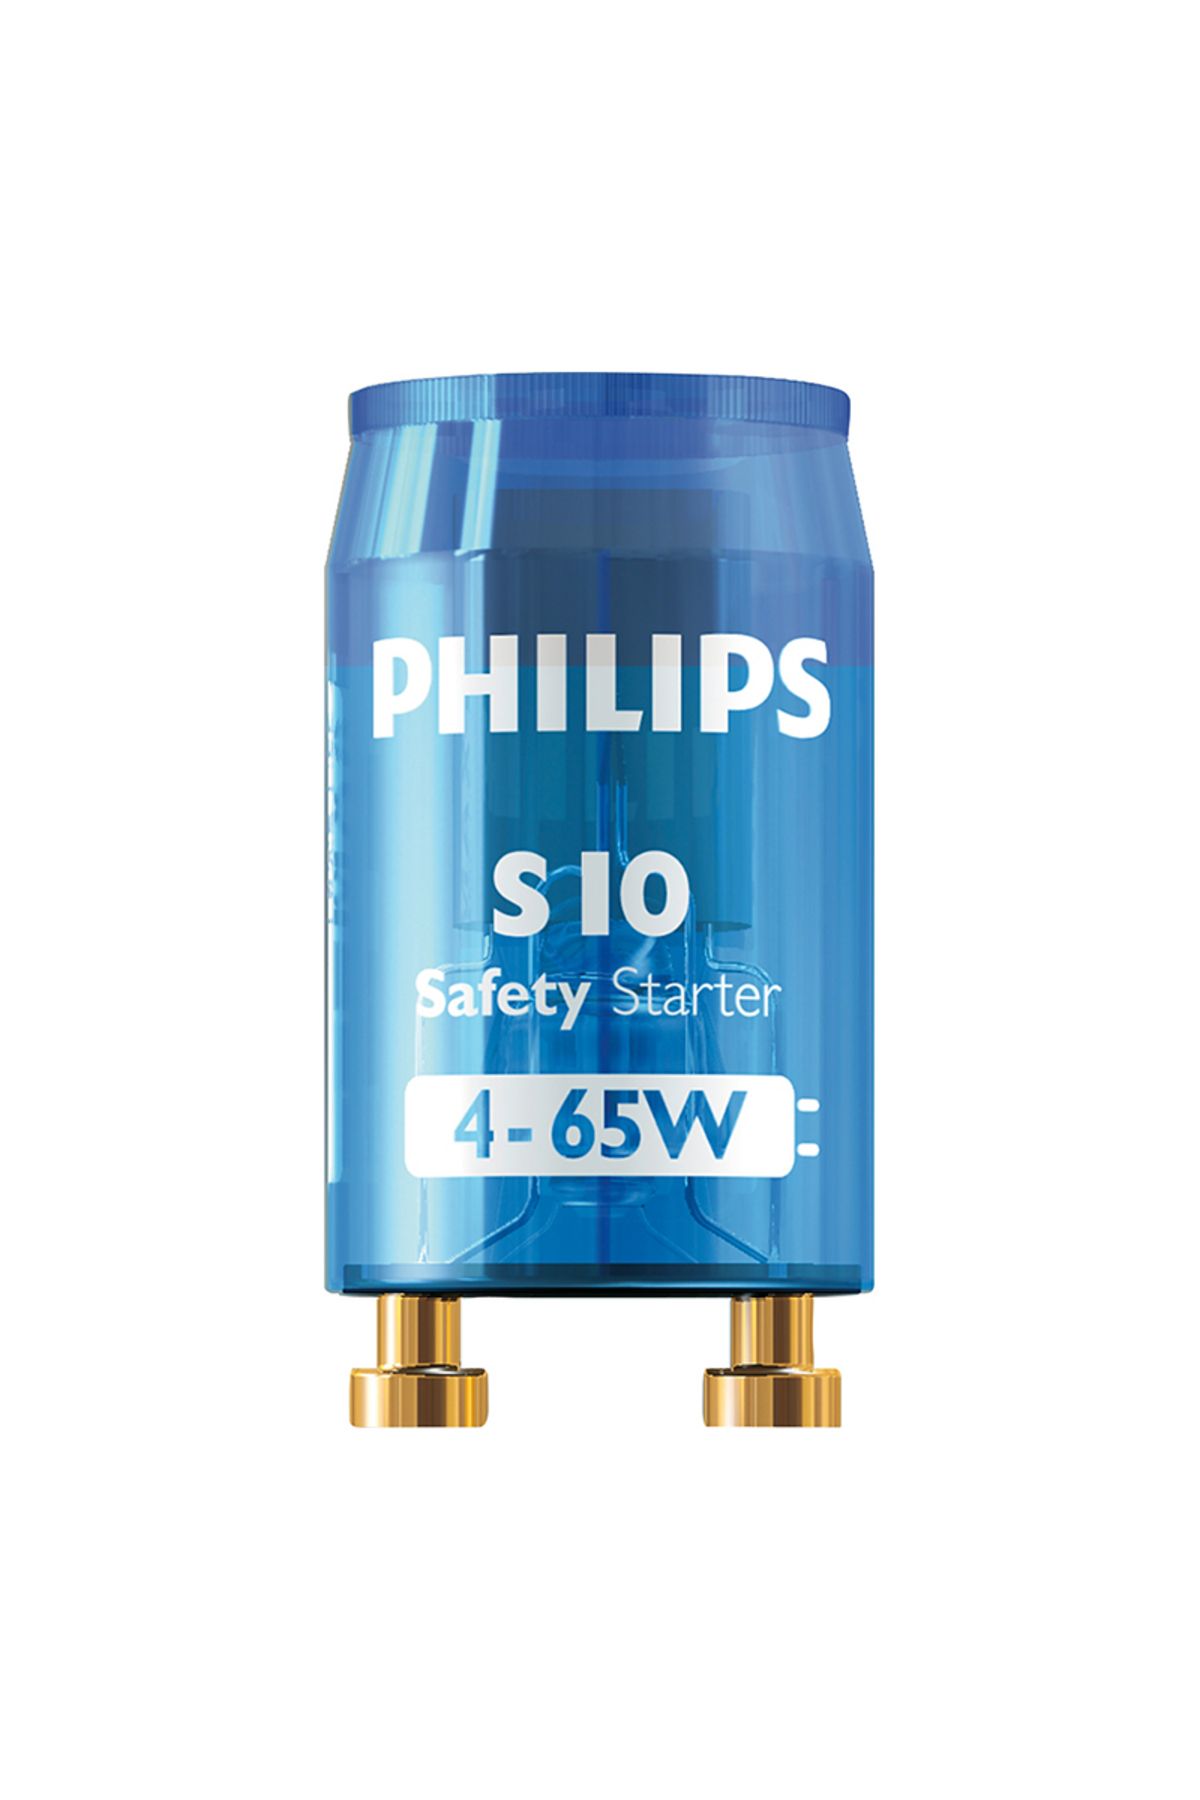 Philips S-10 Starter Philips